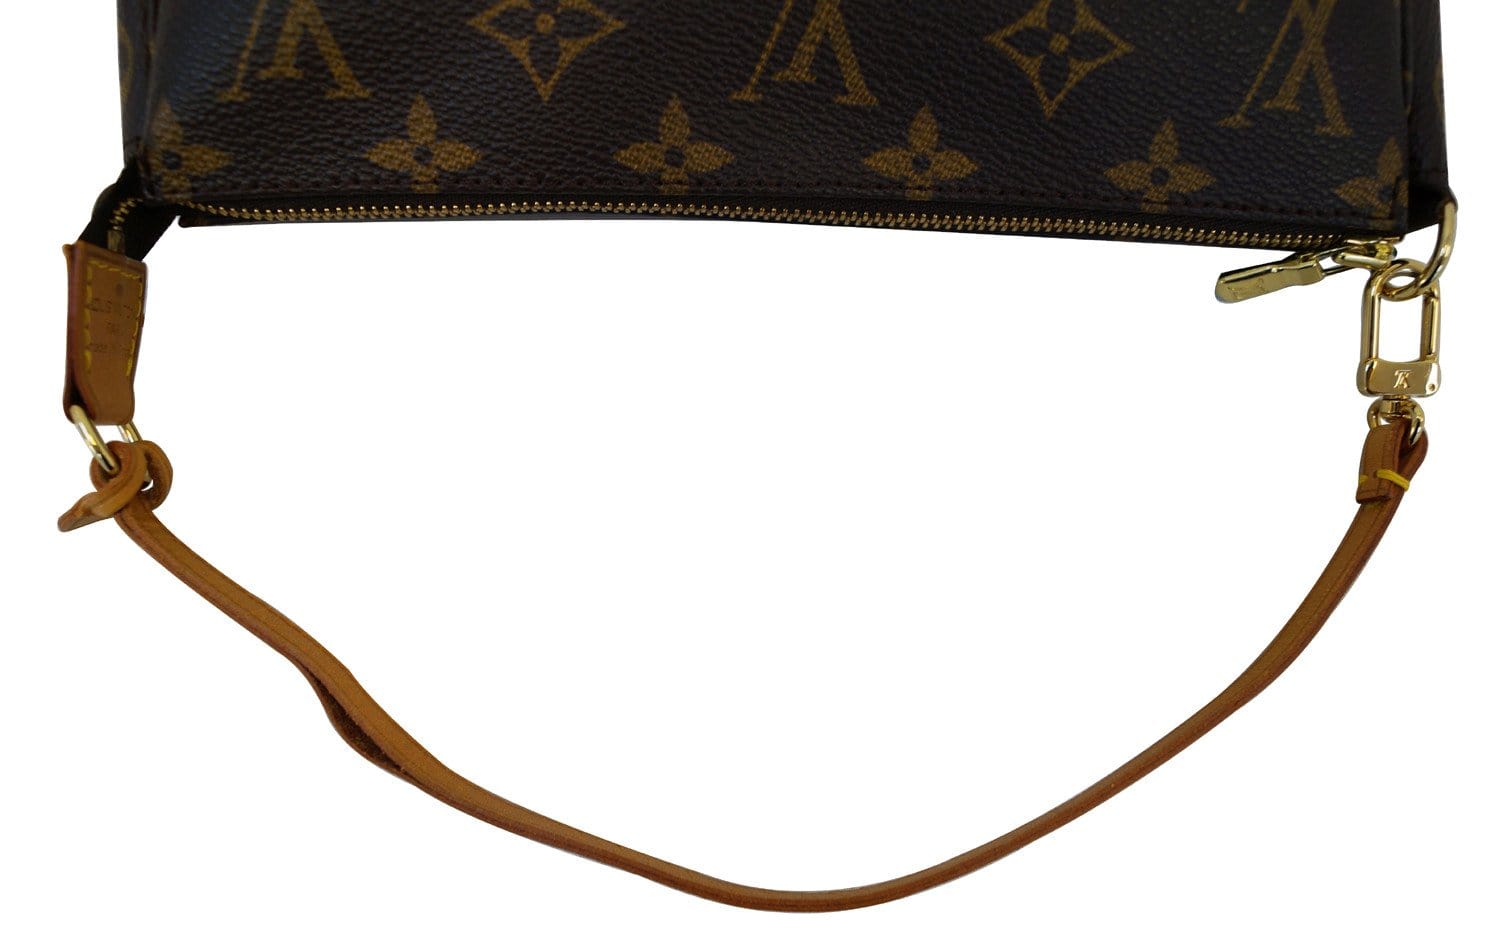 Louis Vuitton Pochette Accessories Monogram Pouch